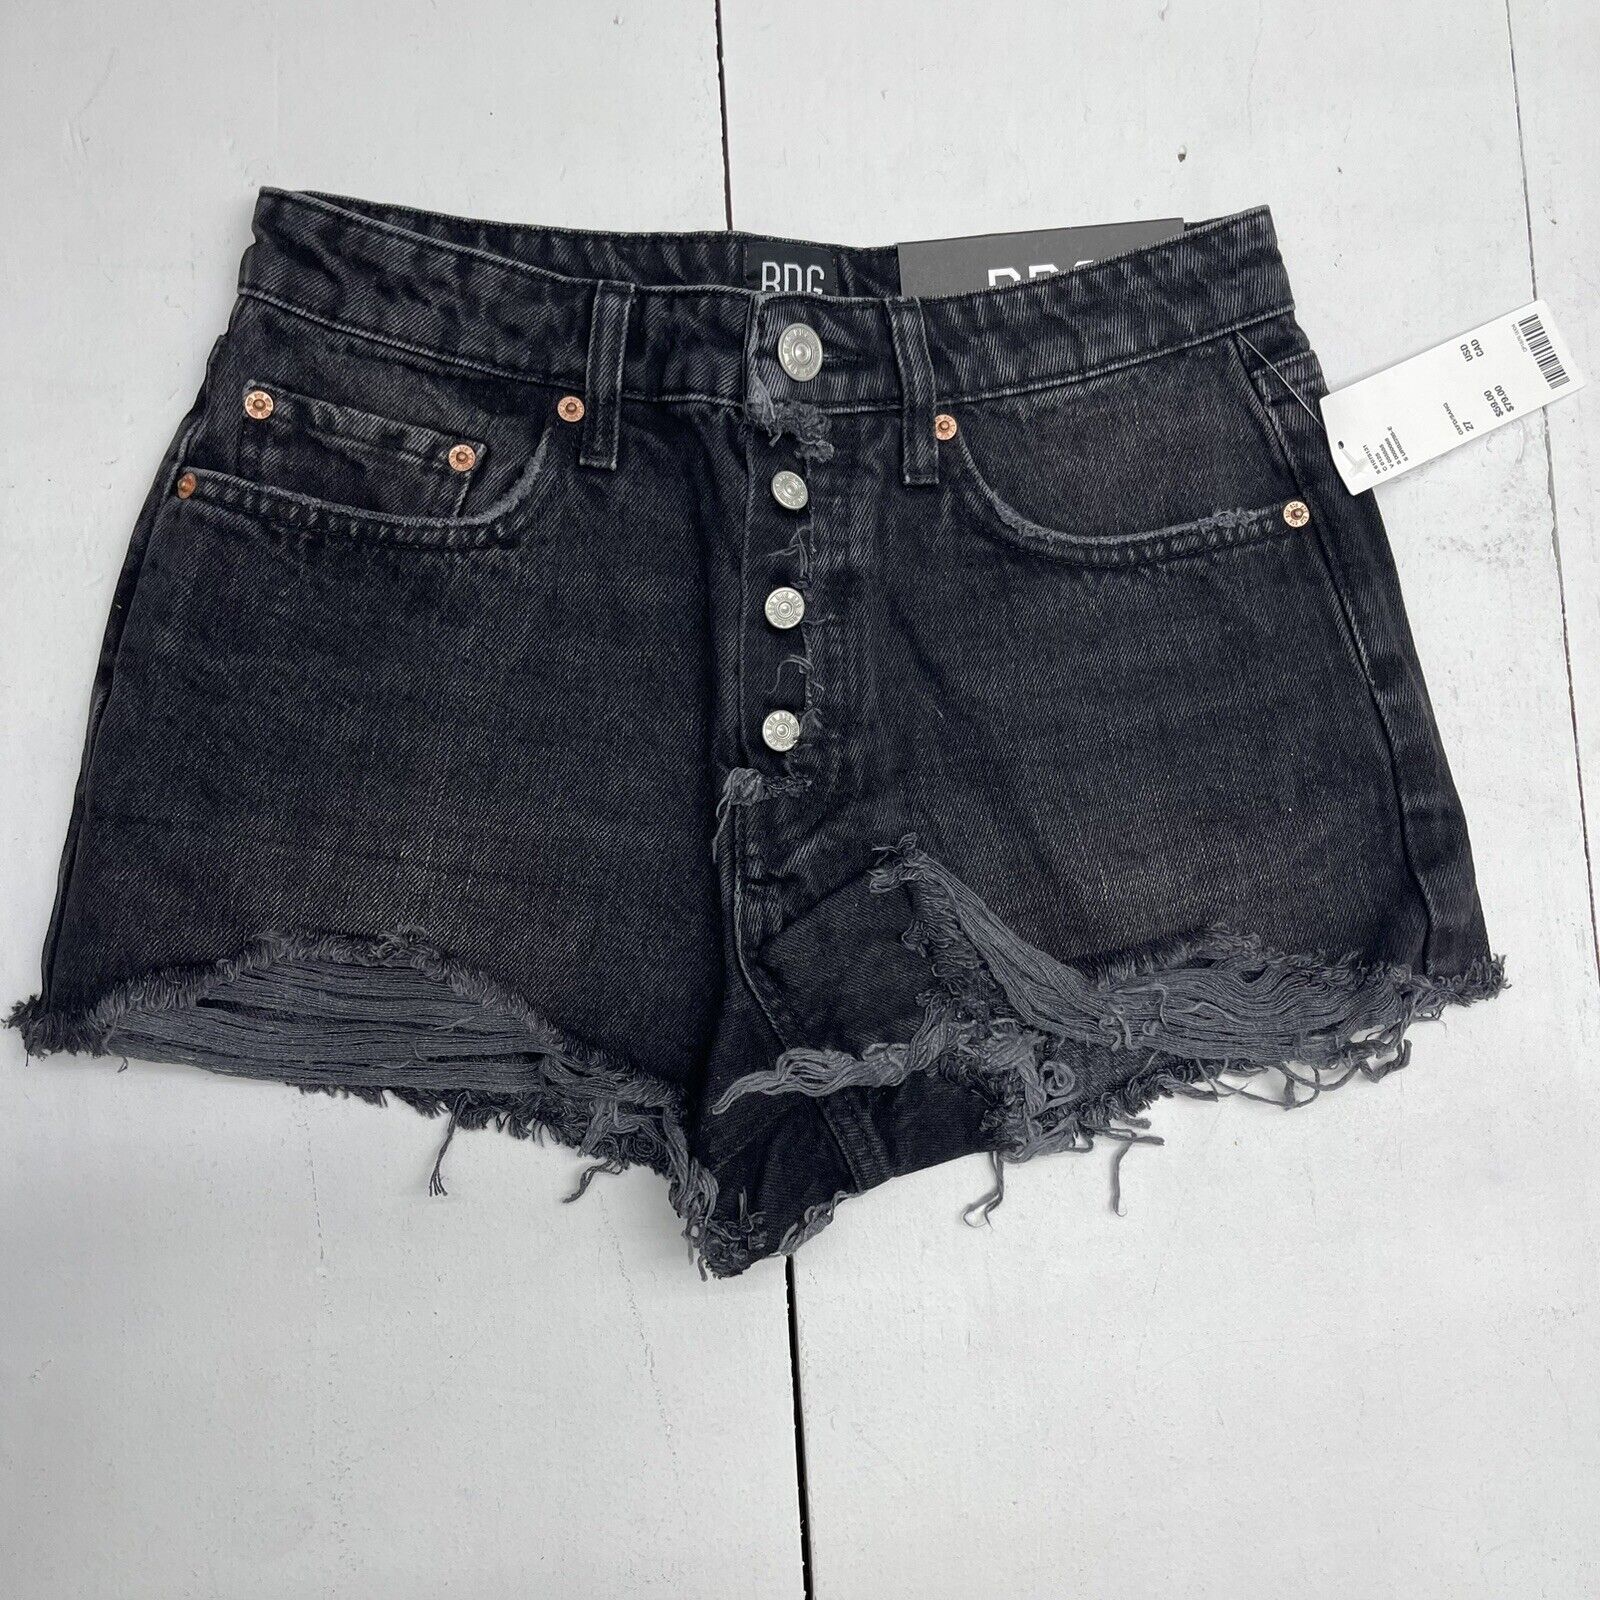 BDG Black Summer Cut Off Denim Distressed Shorts Women’s Size 27 New